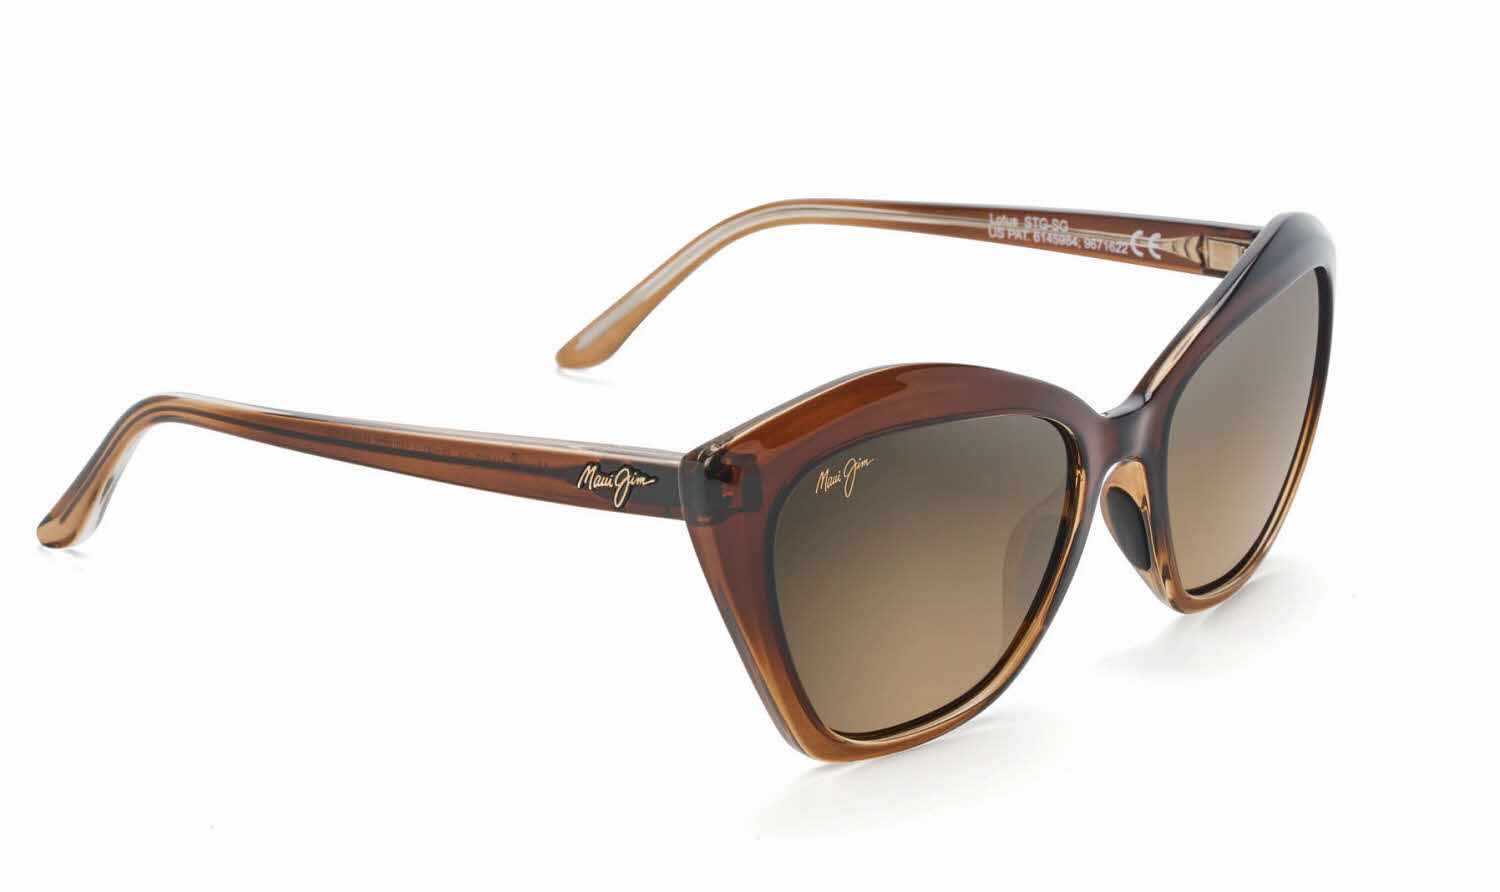 Maui Jim Lotus-827 Sunglasses